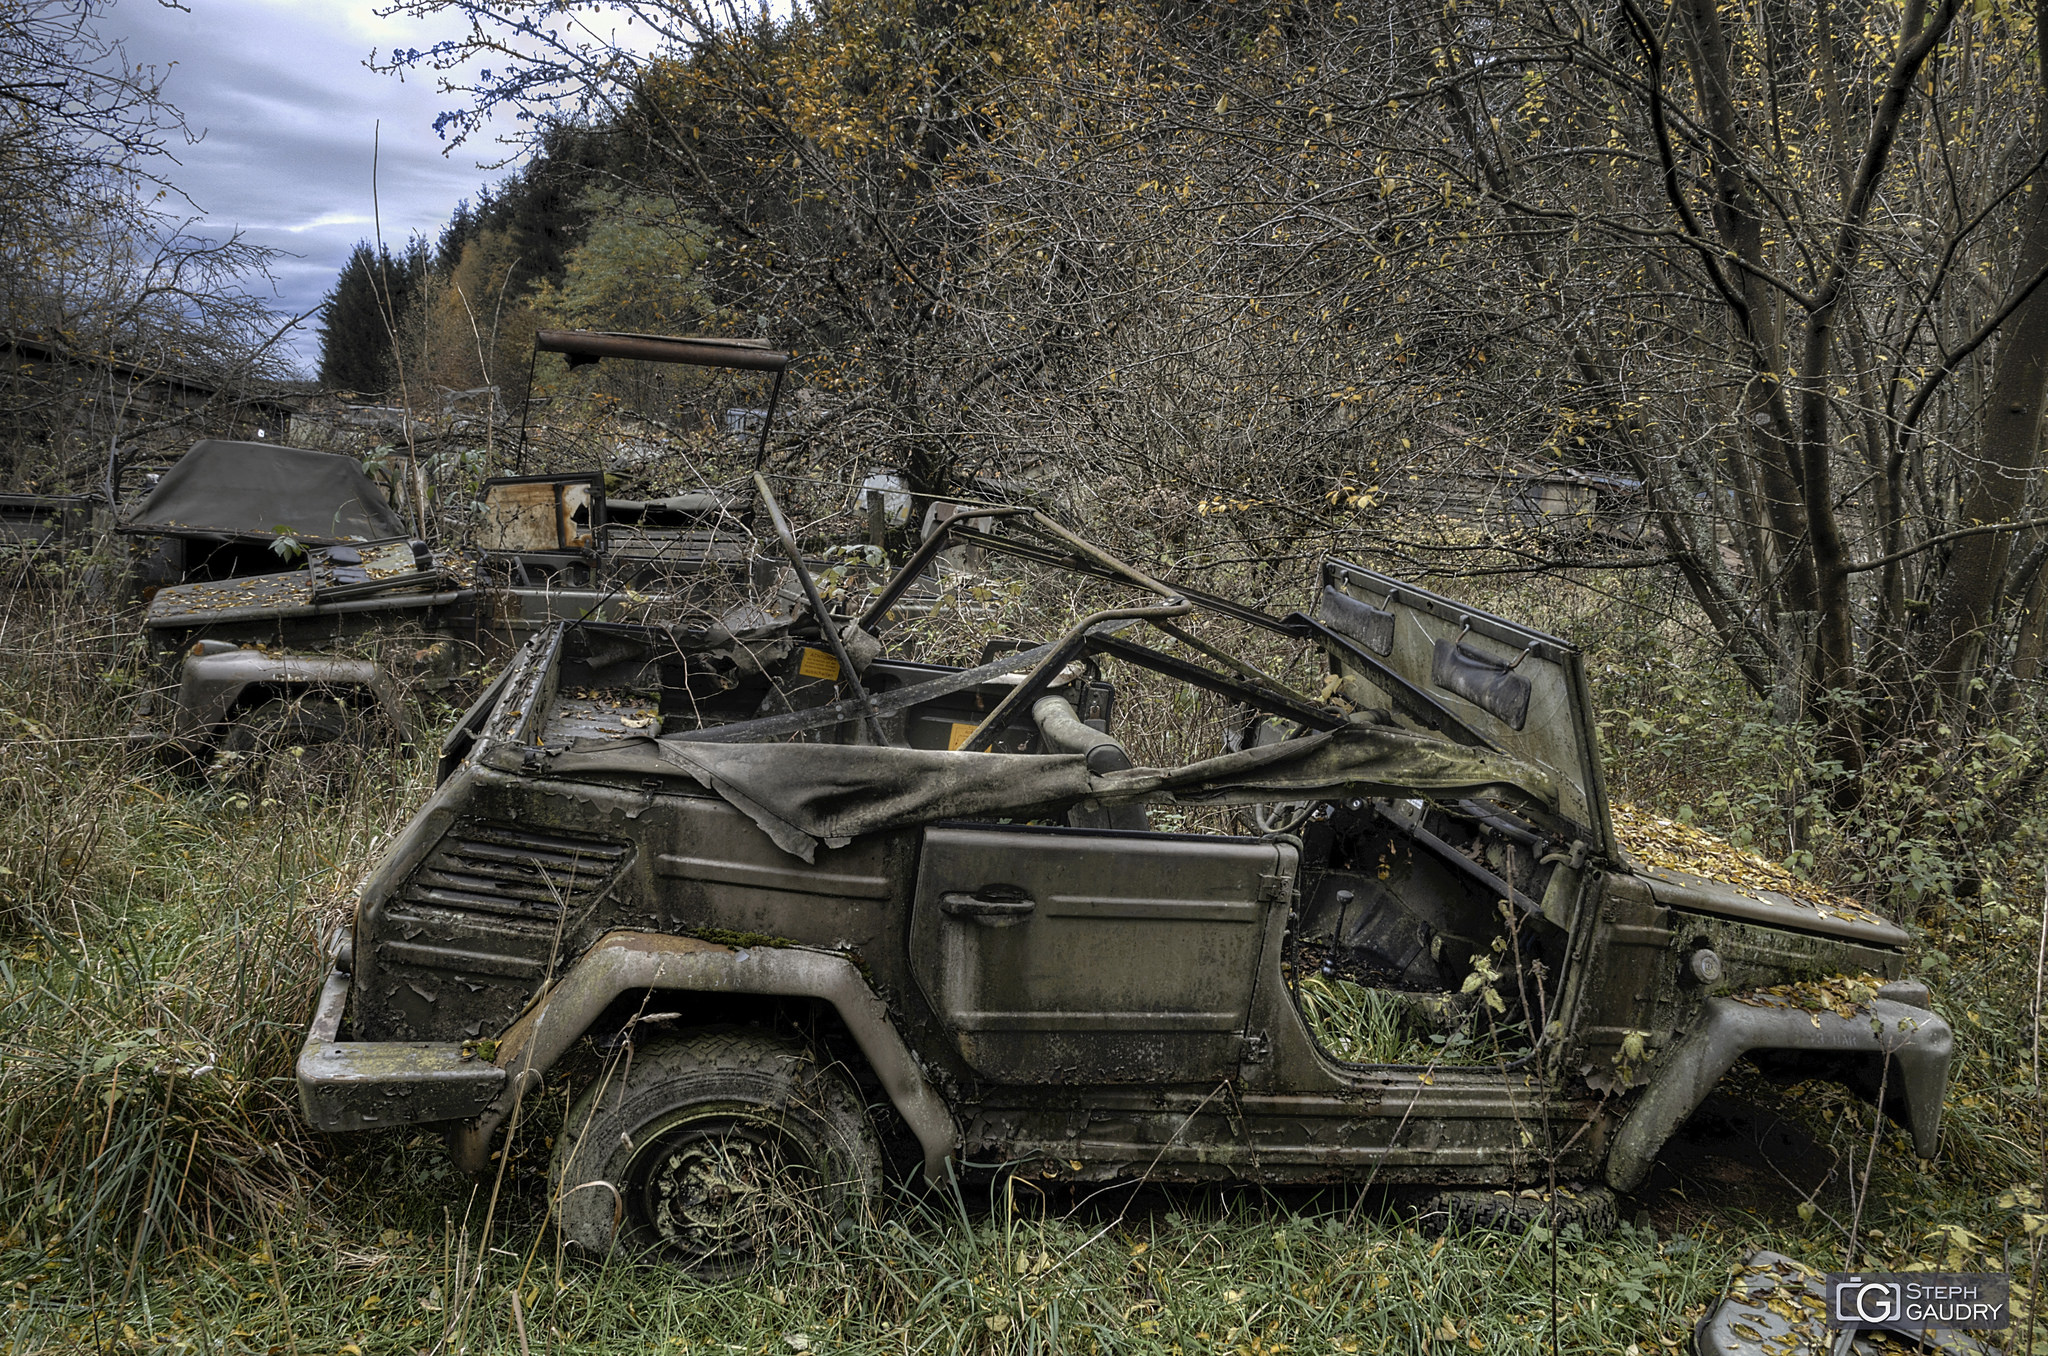 Jeeps graveyard [Click to start slideshow]